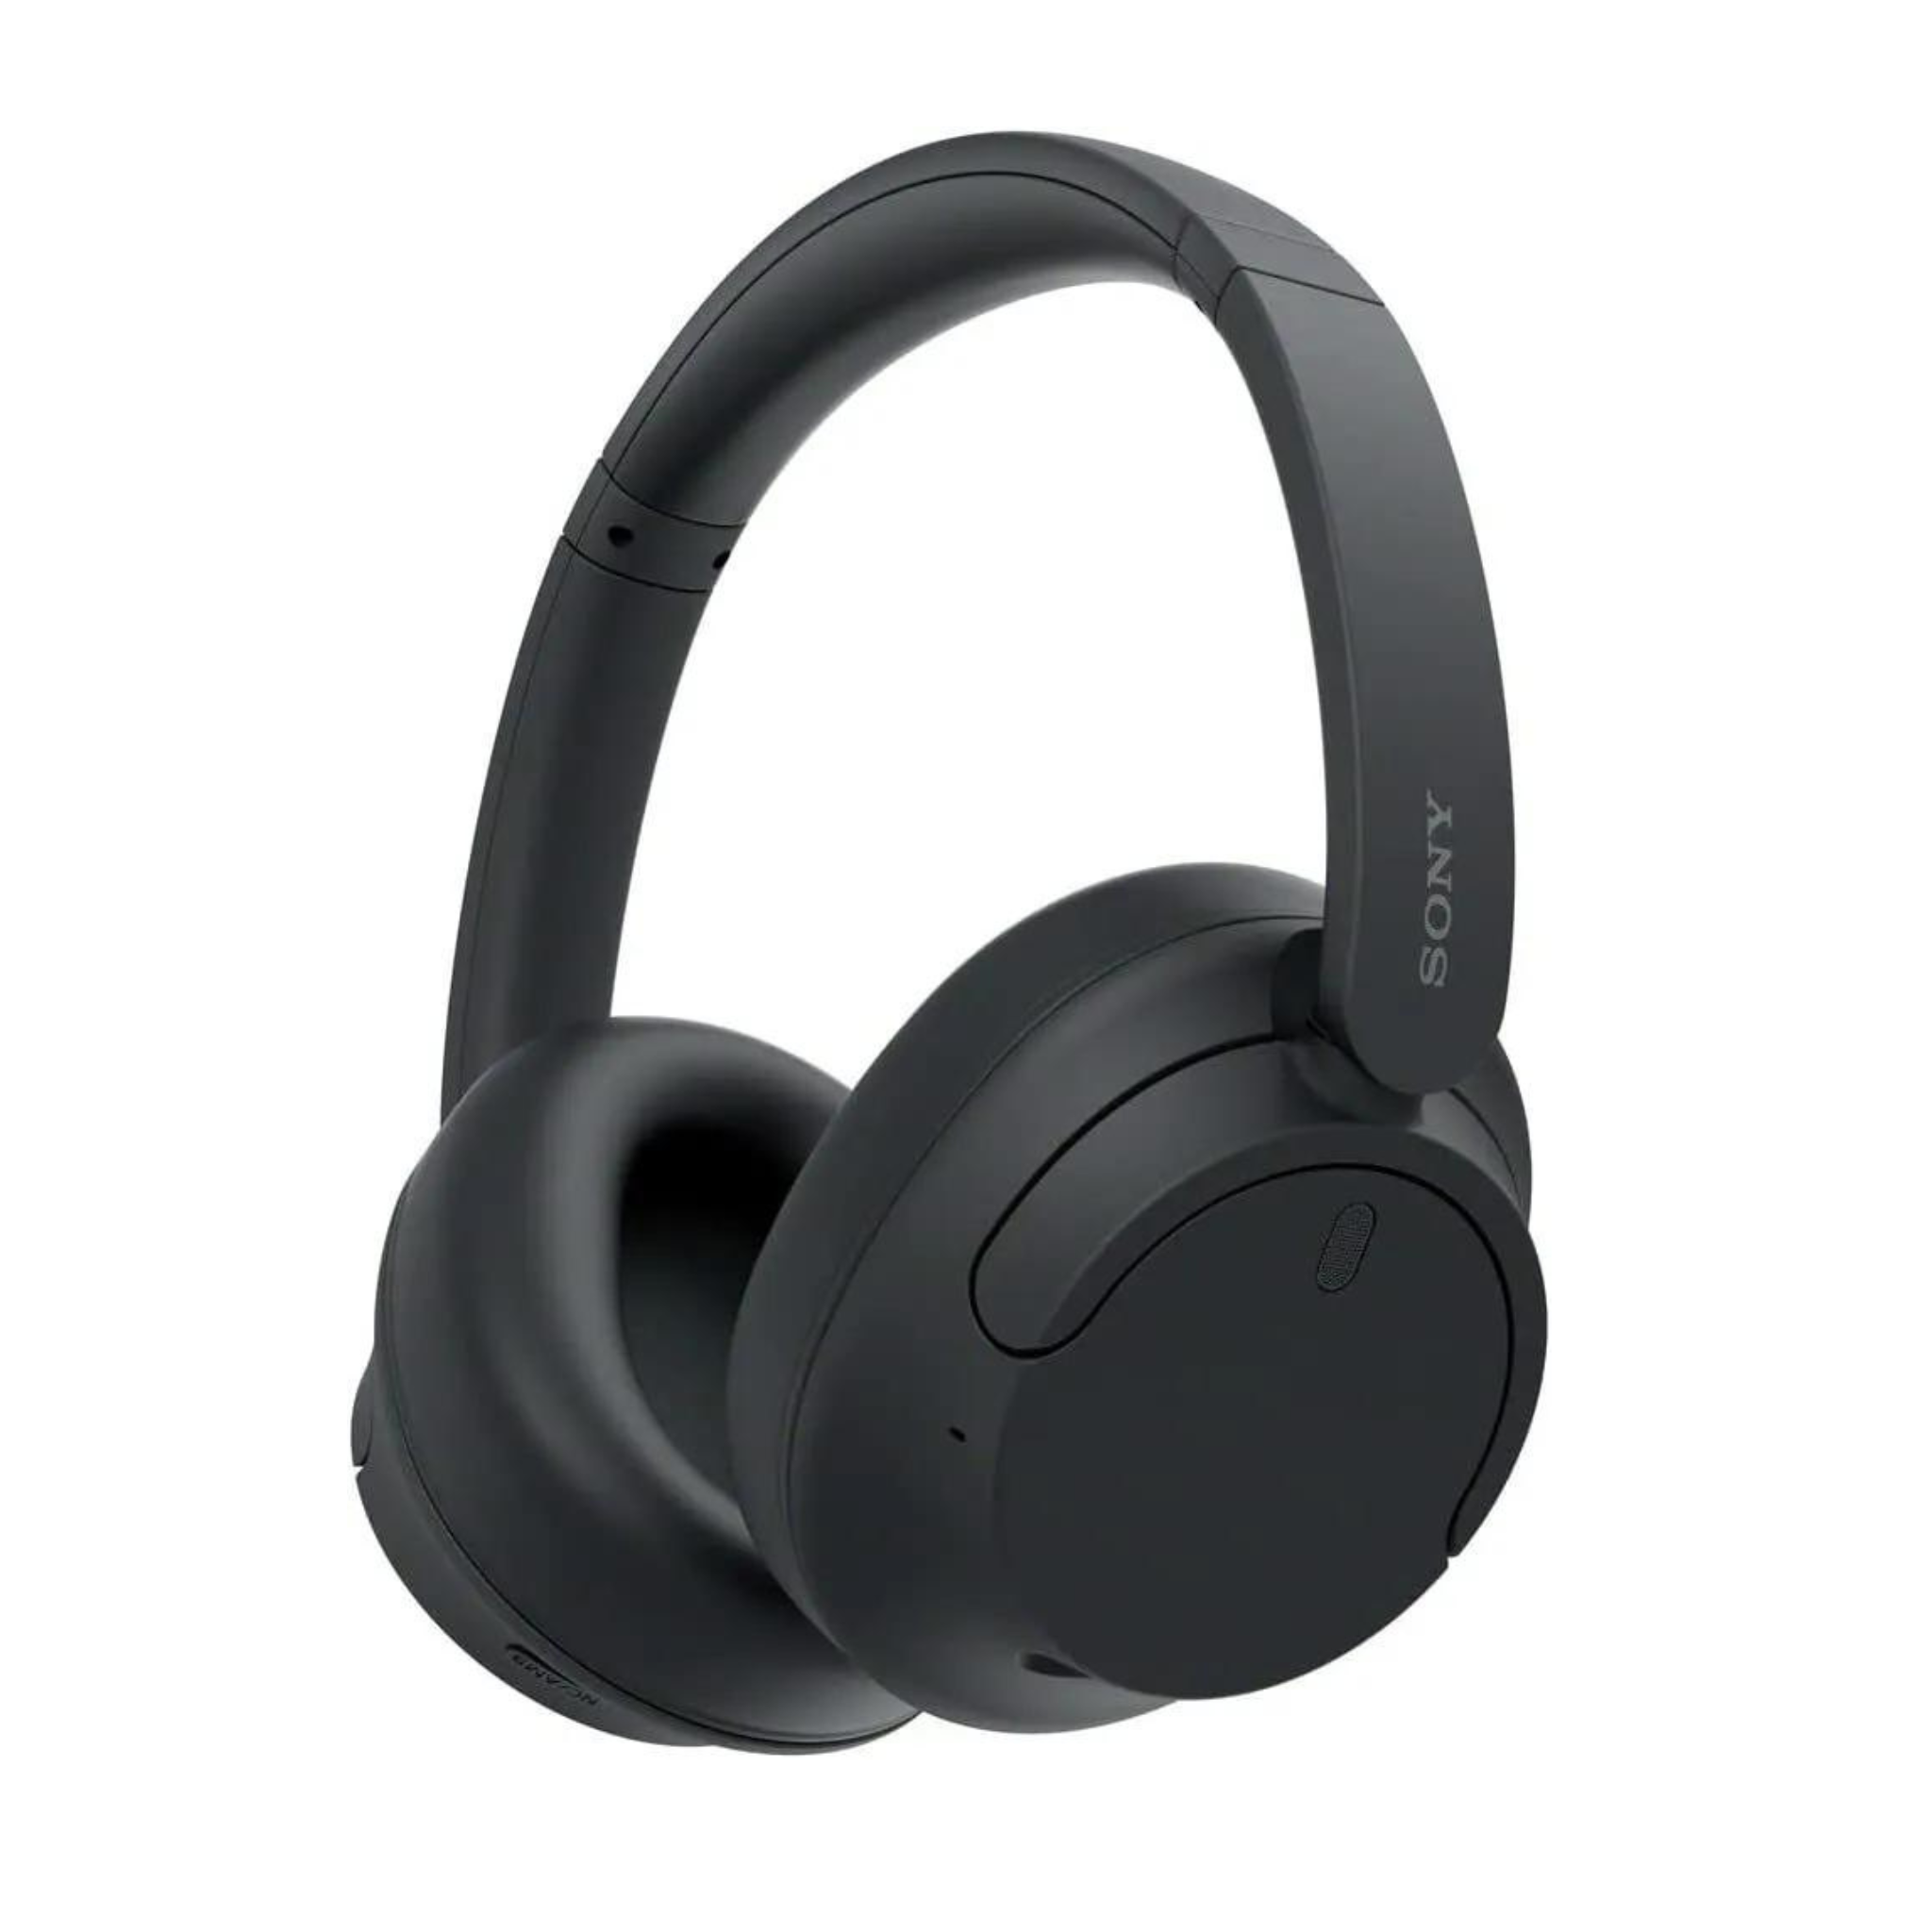 Sony Noise Canceling Wireless Headphones (Black)